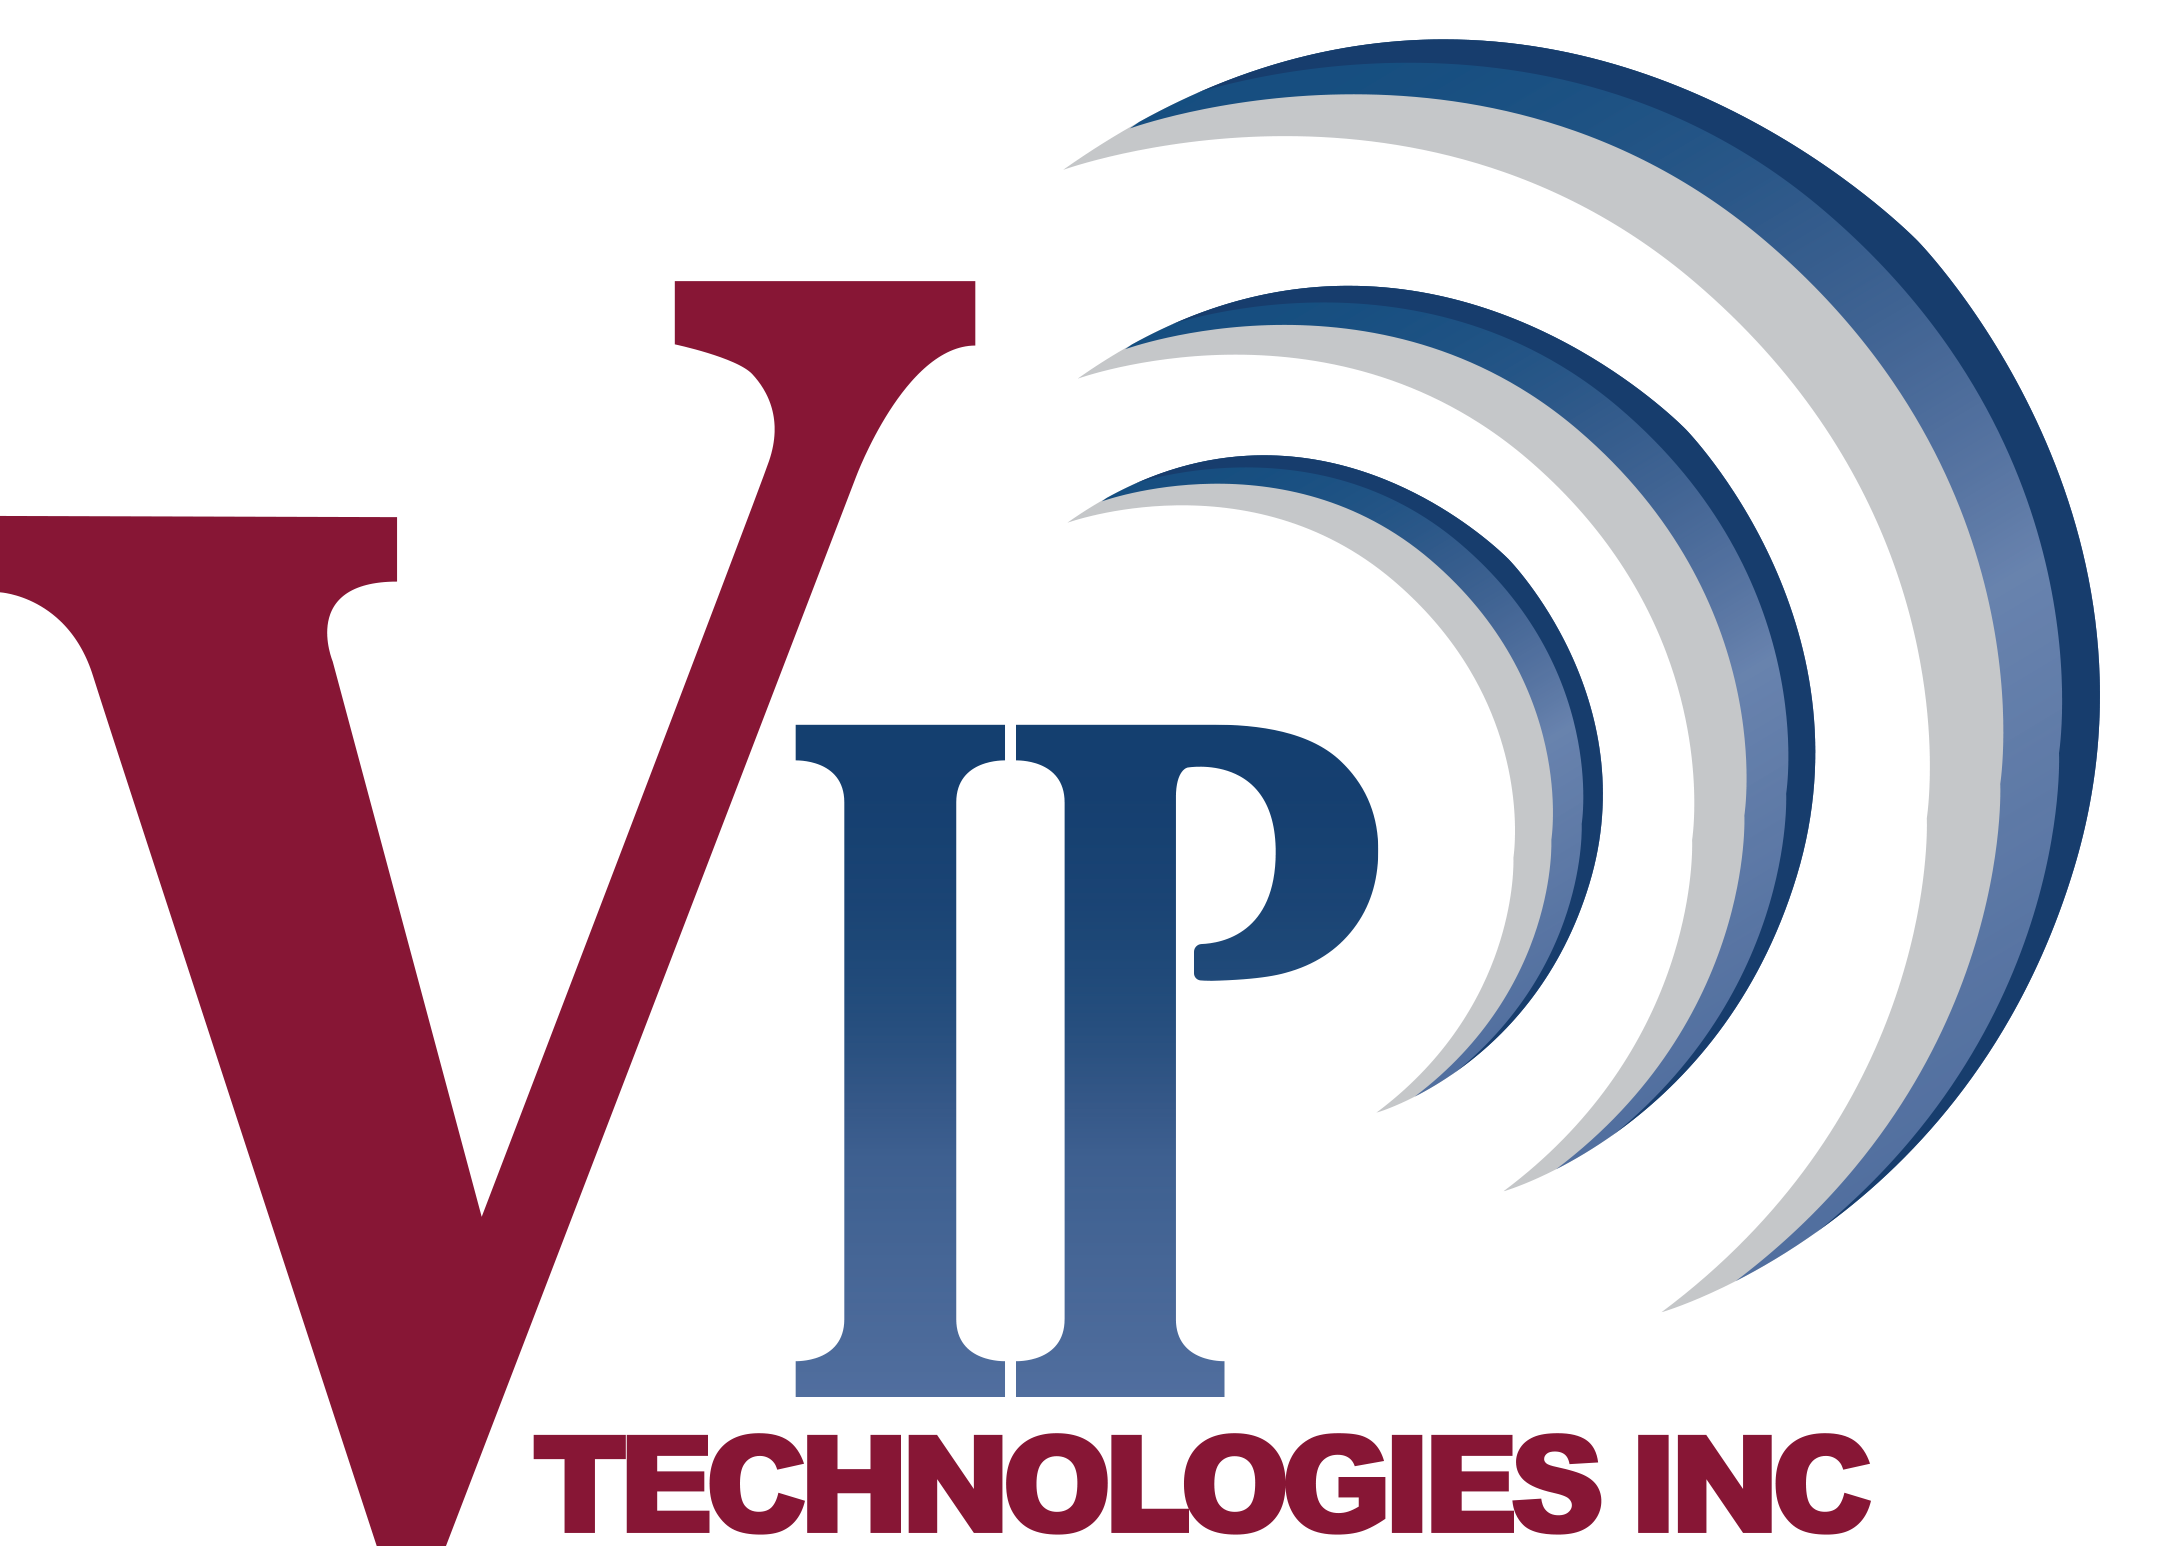 VIP Technologies